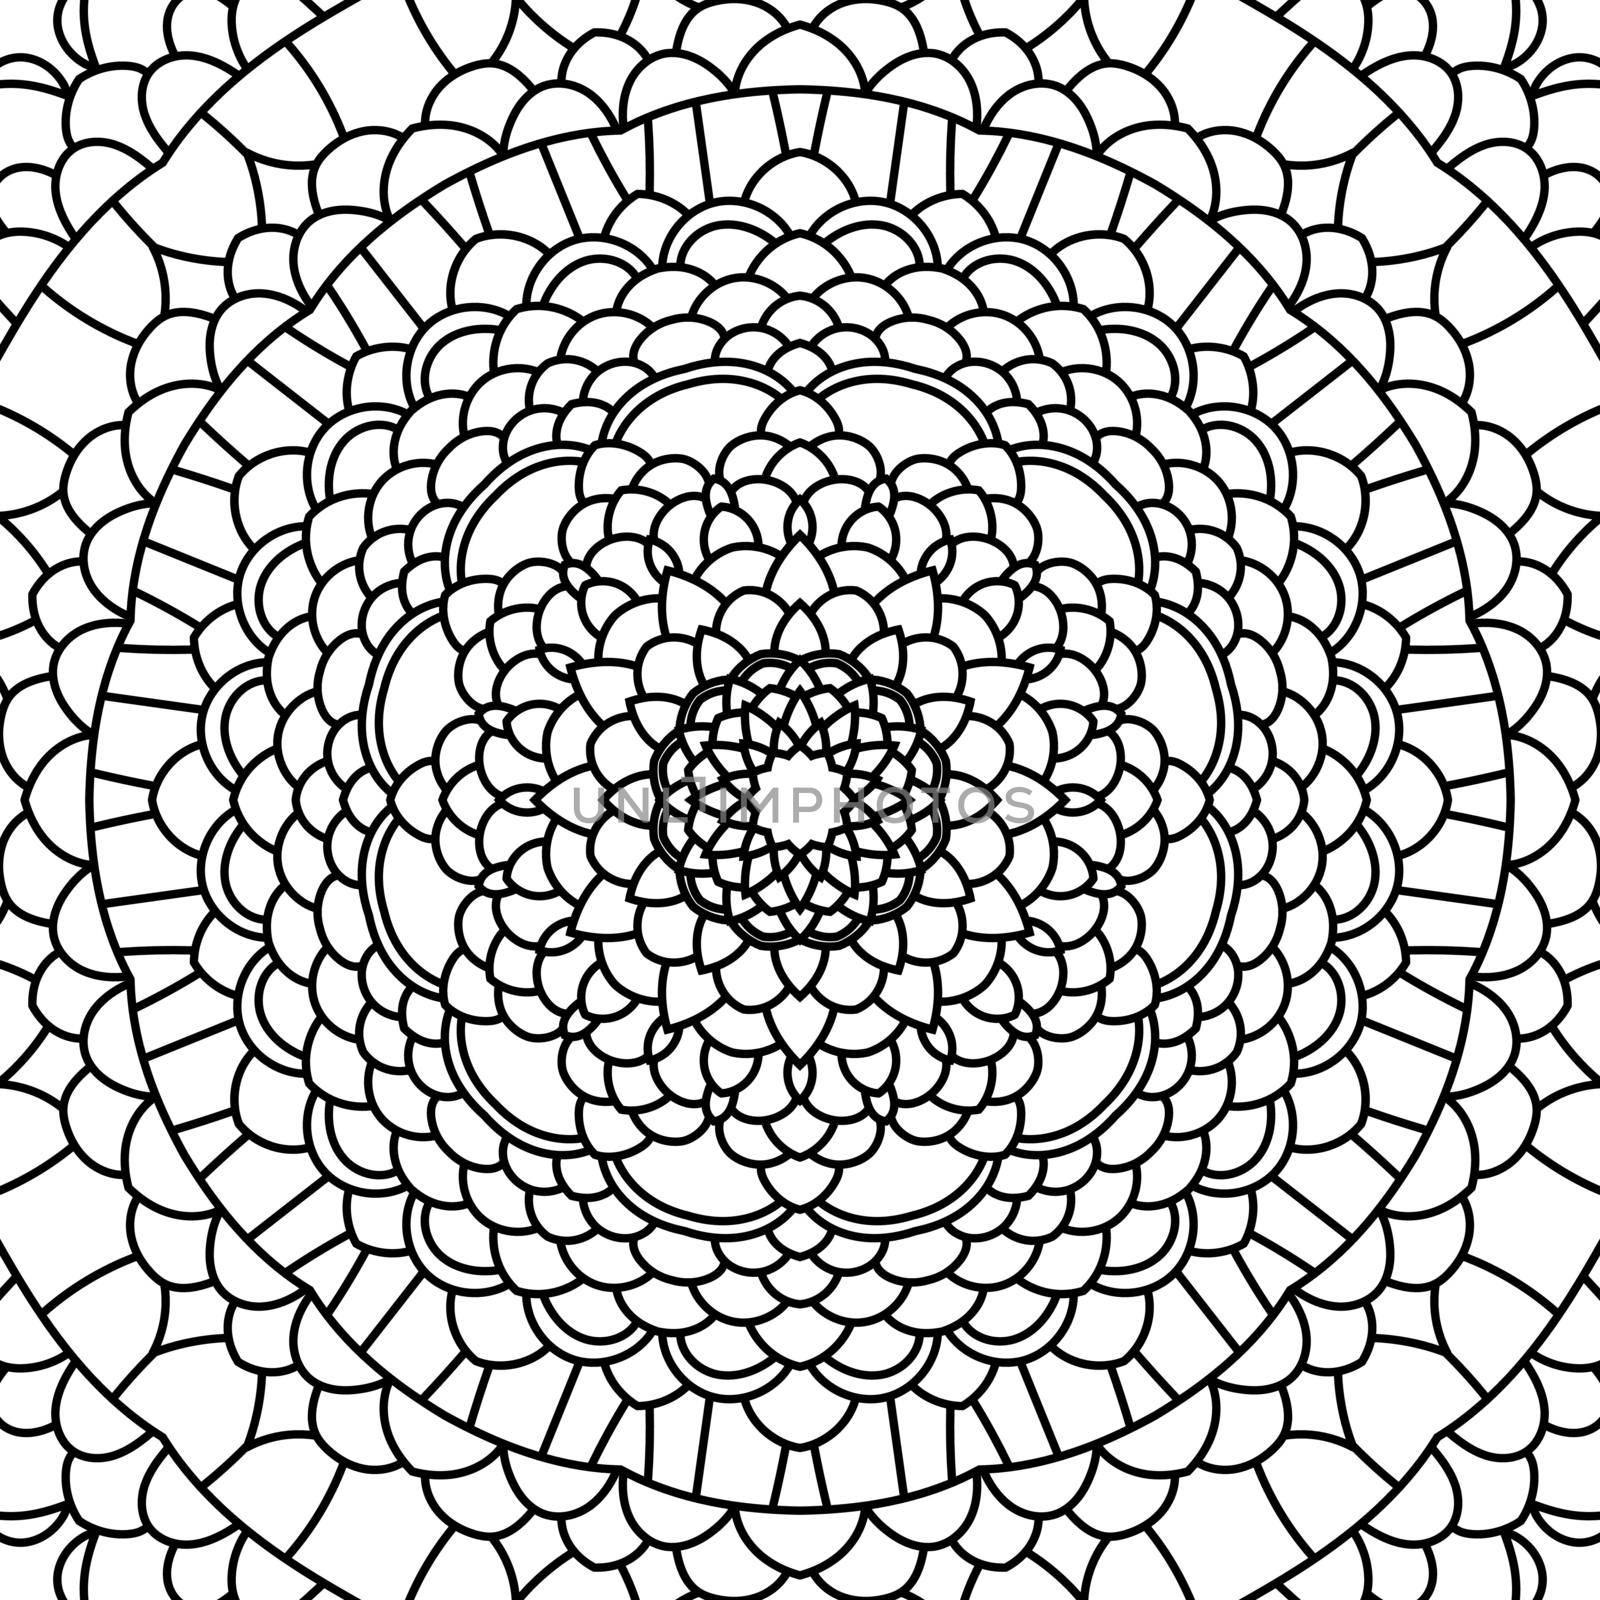 Mandala. Round Ornament Pattern. Vintage black and white decorative elements. Hand drawn background. Islam, Arabic, Indian, ottoman motifs. Isolated on white background. by allaku